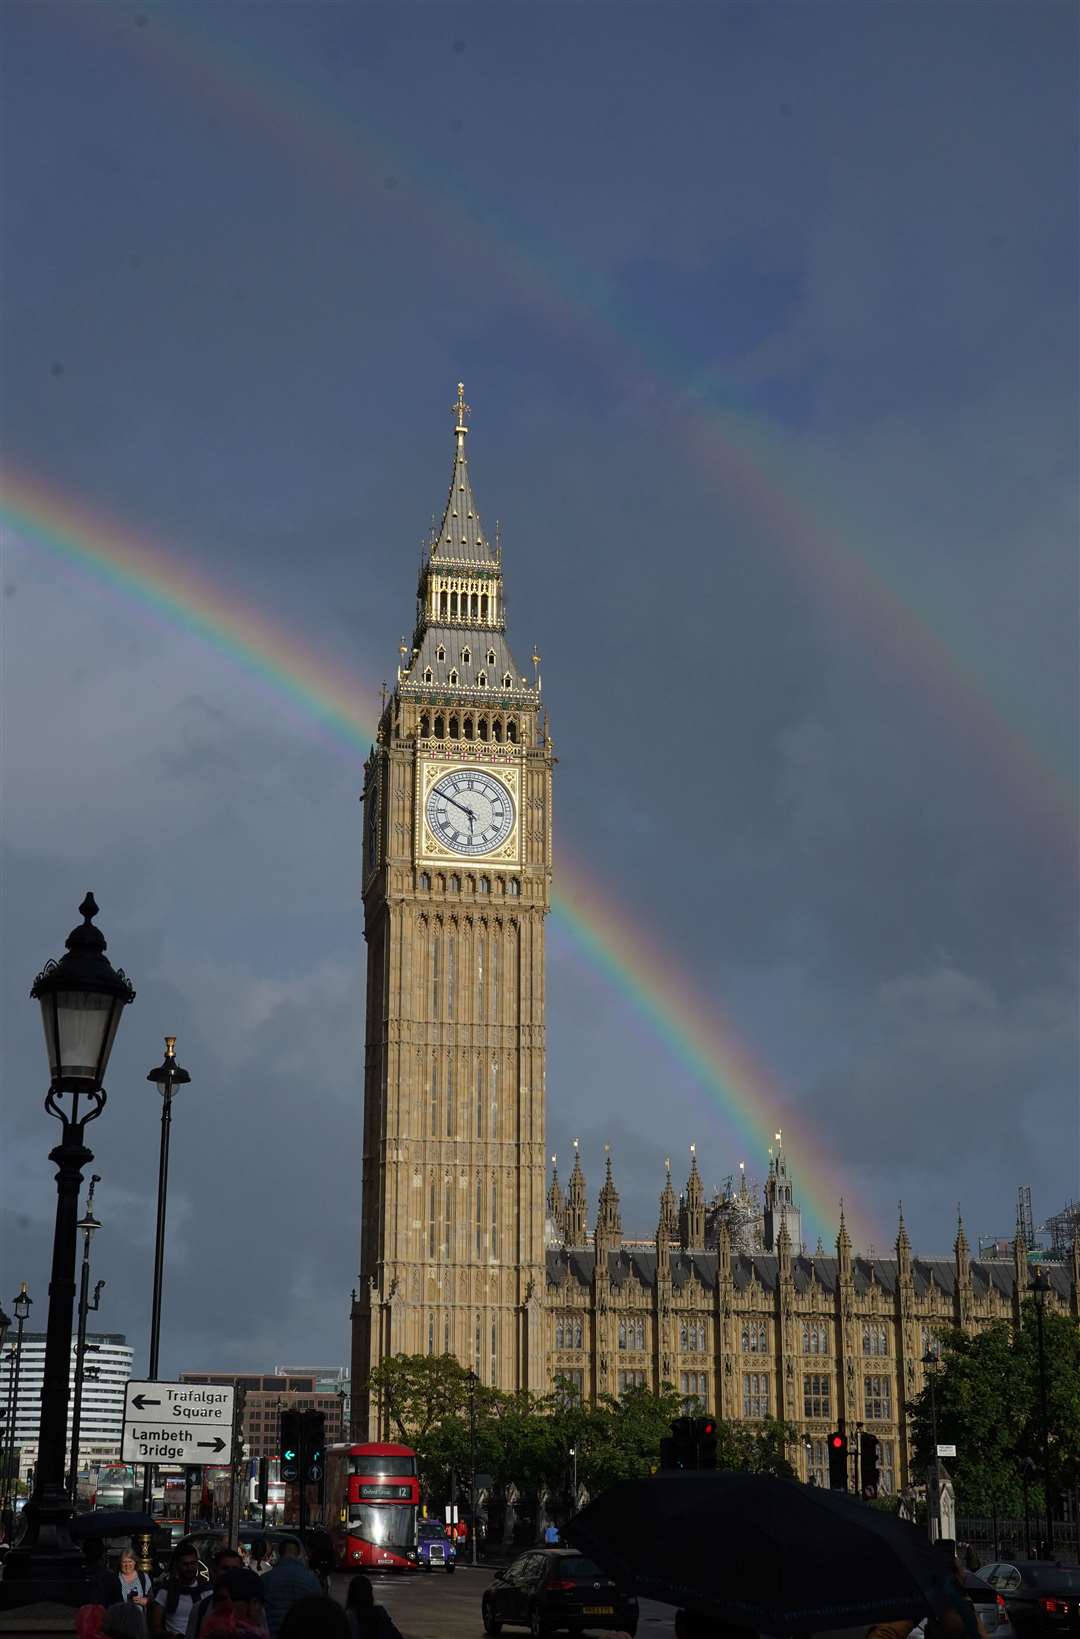 A double rainbow is seen over Elizabeth Tower in Westminster, London, following a rain shower (Ian West/PA)